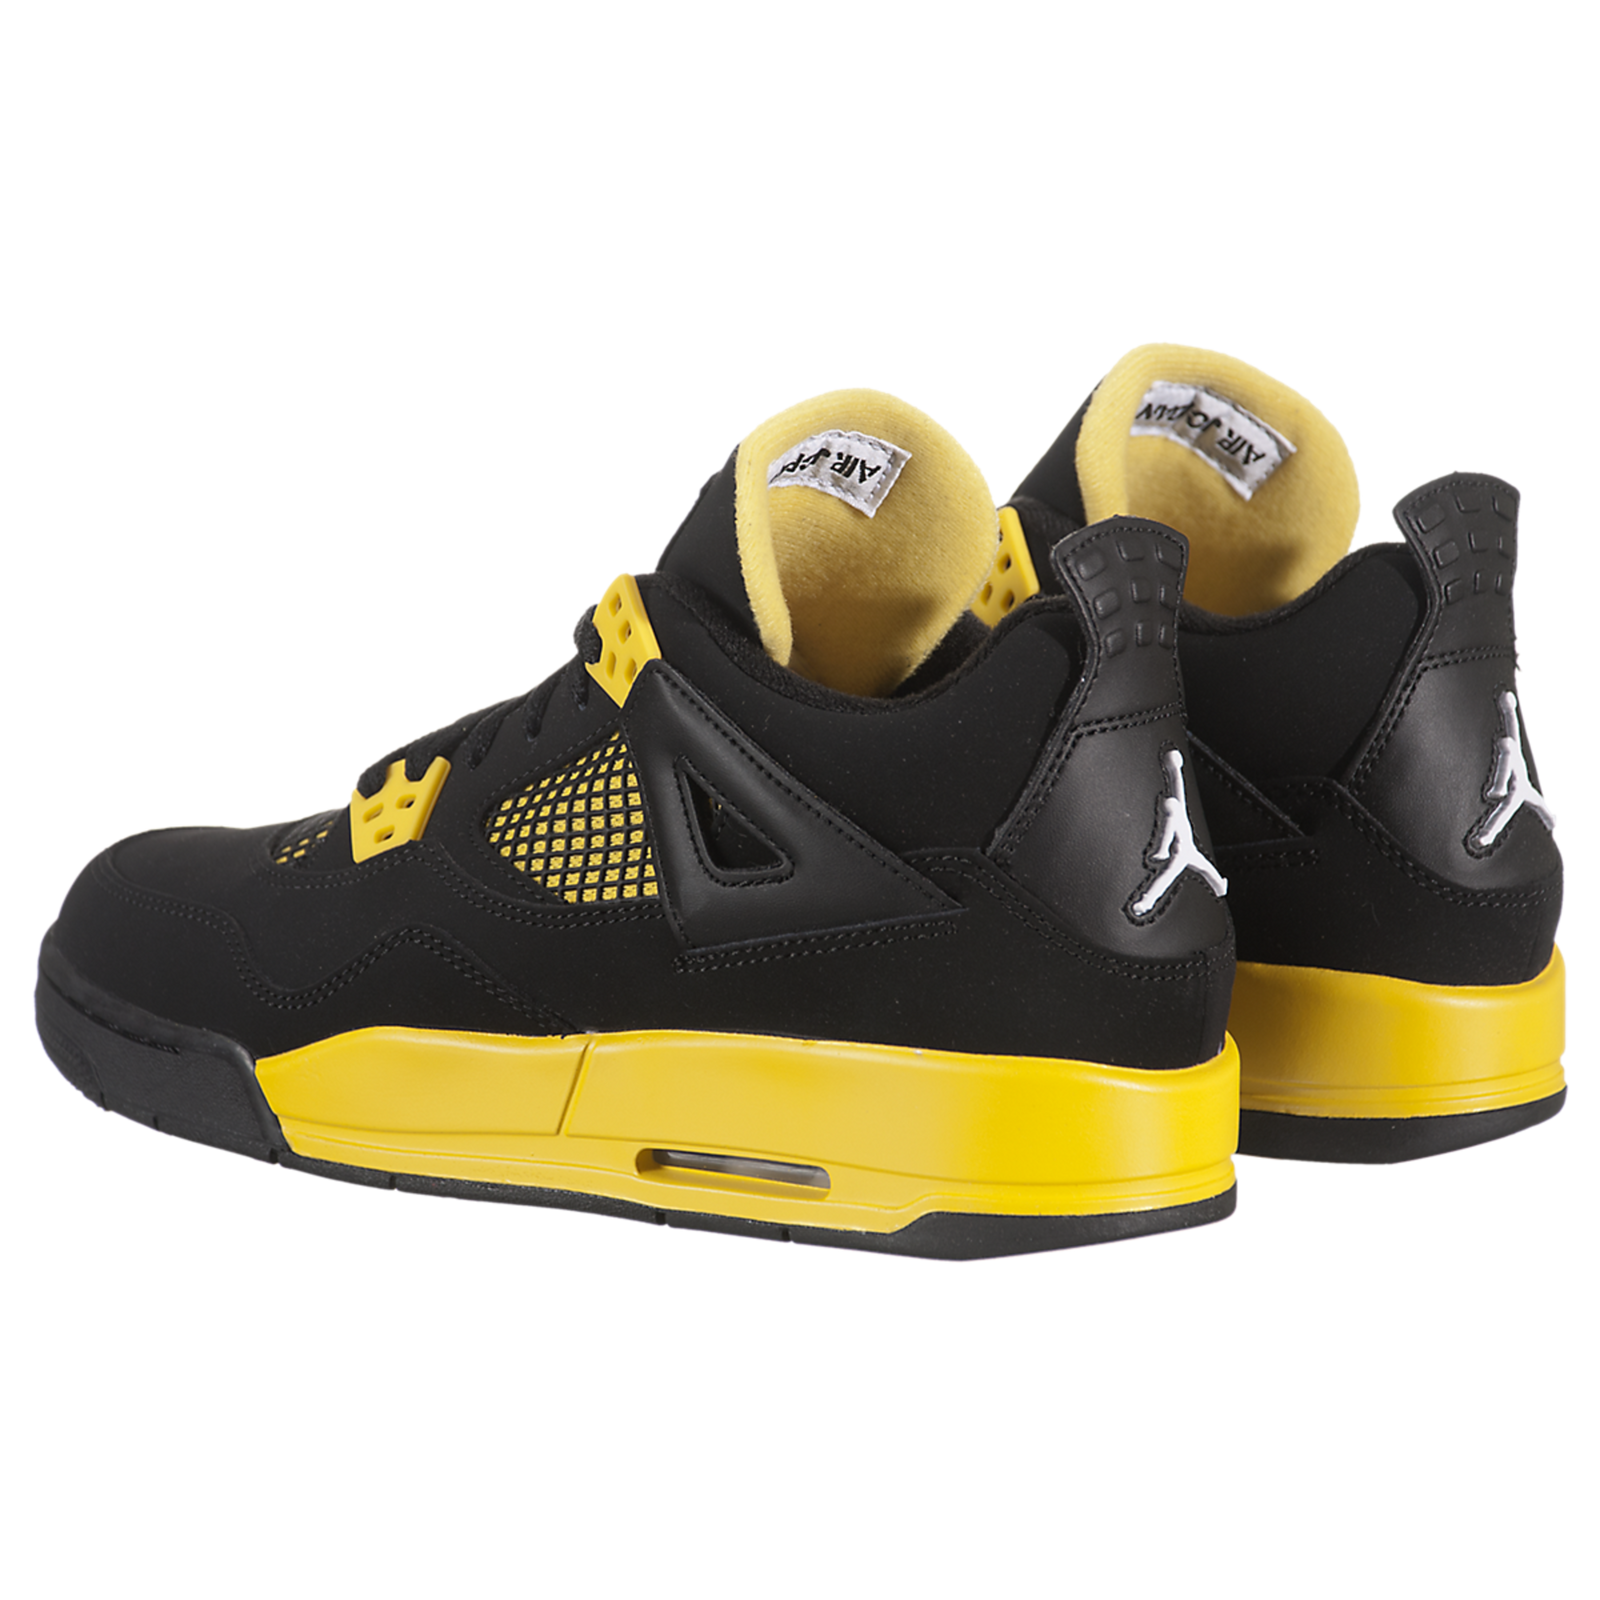 Nike Air Jordan 4 Retro Basketball Shoes408452008 4 F998bd1b 7e7e 460d 89a2 5cae28a883d3 1600x ?v=1591937471